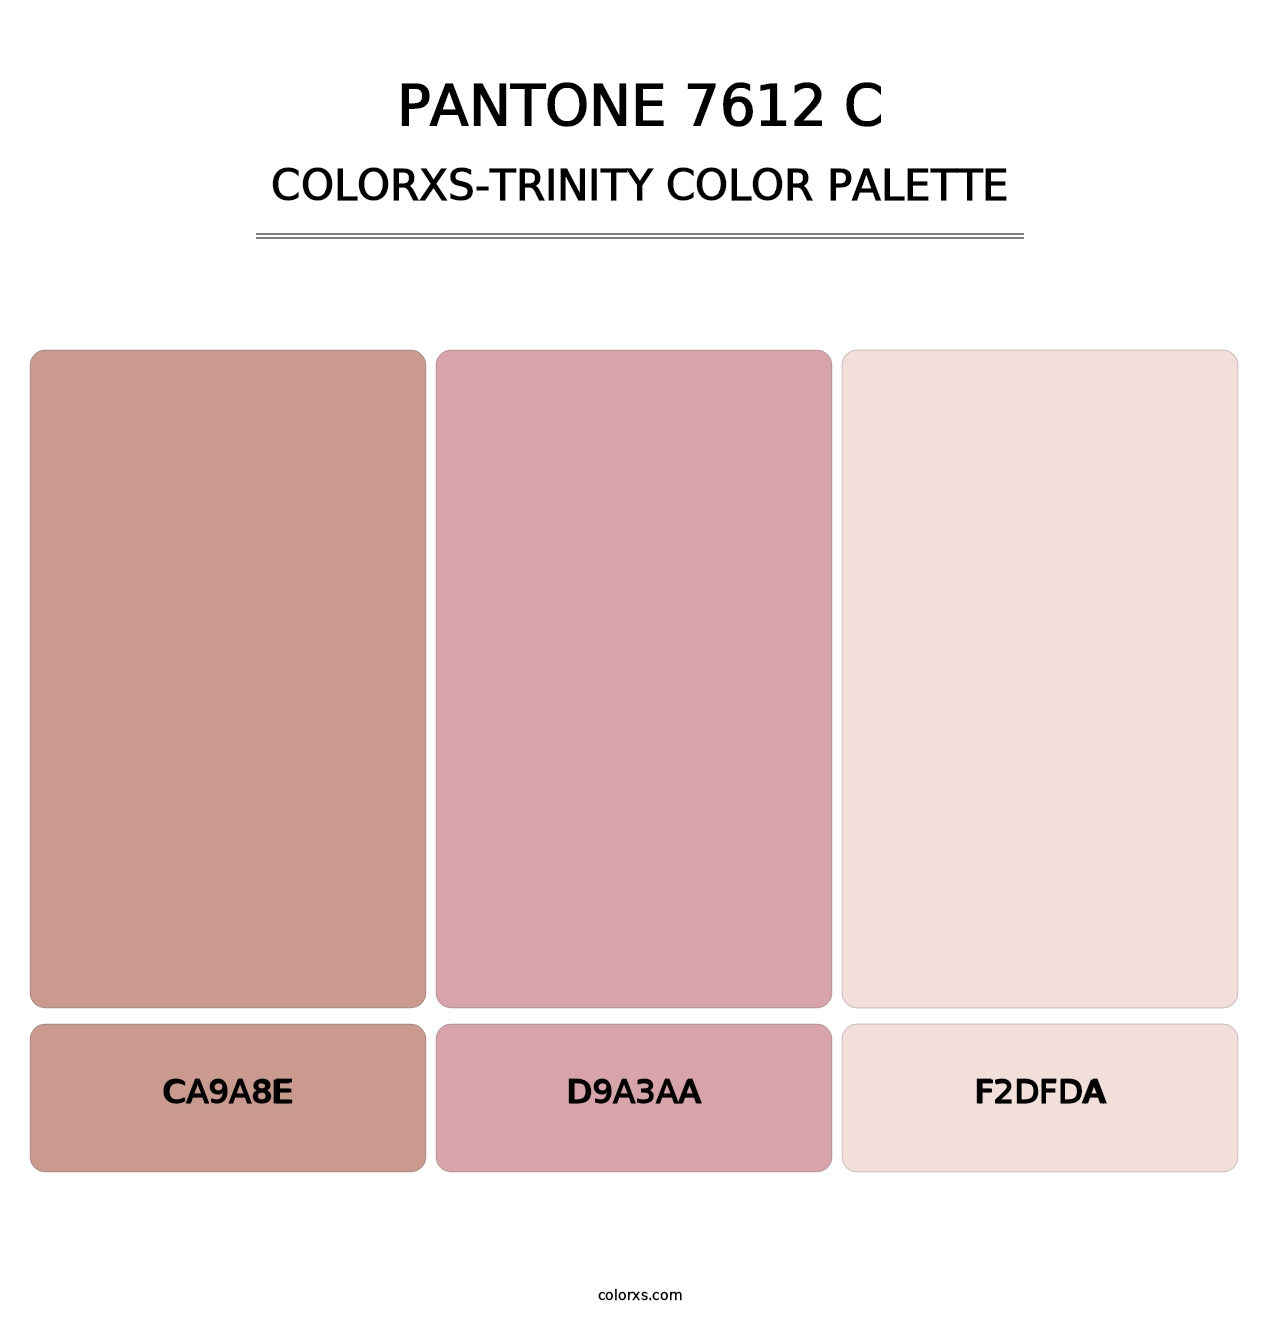 PANTONE 7612 C - Colorxs Trinity Palette